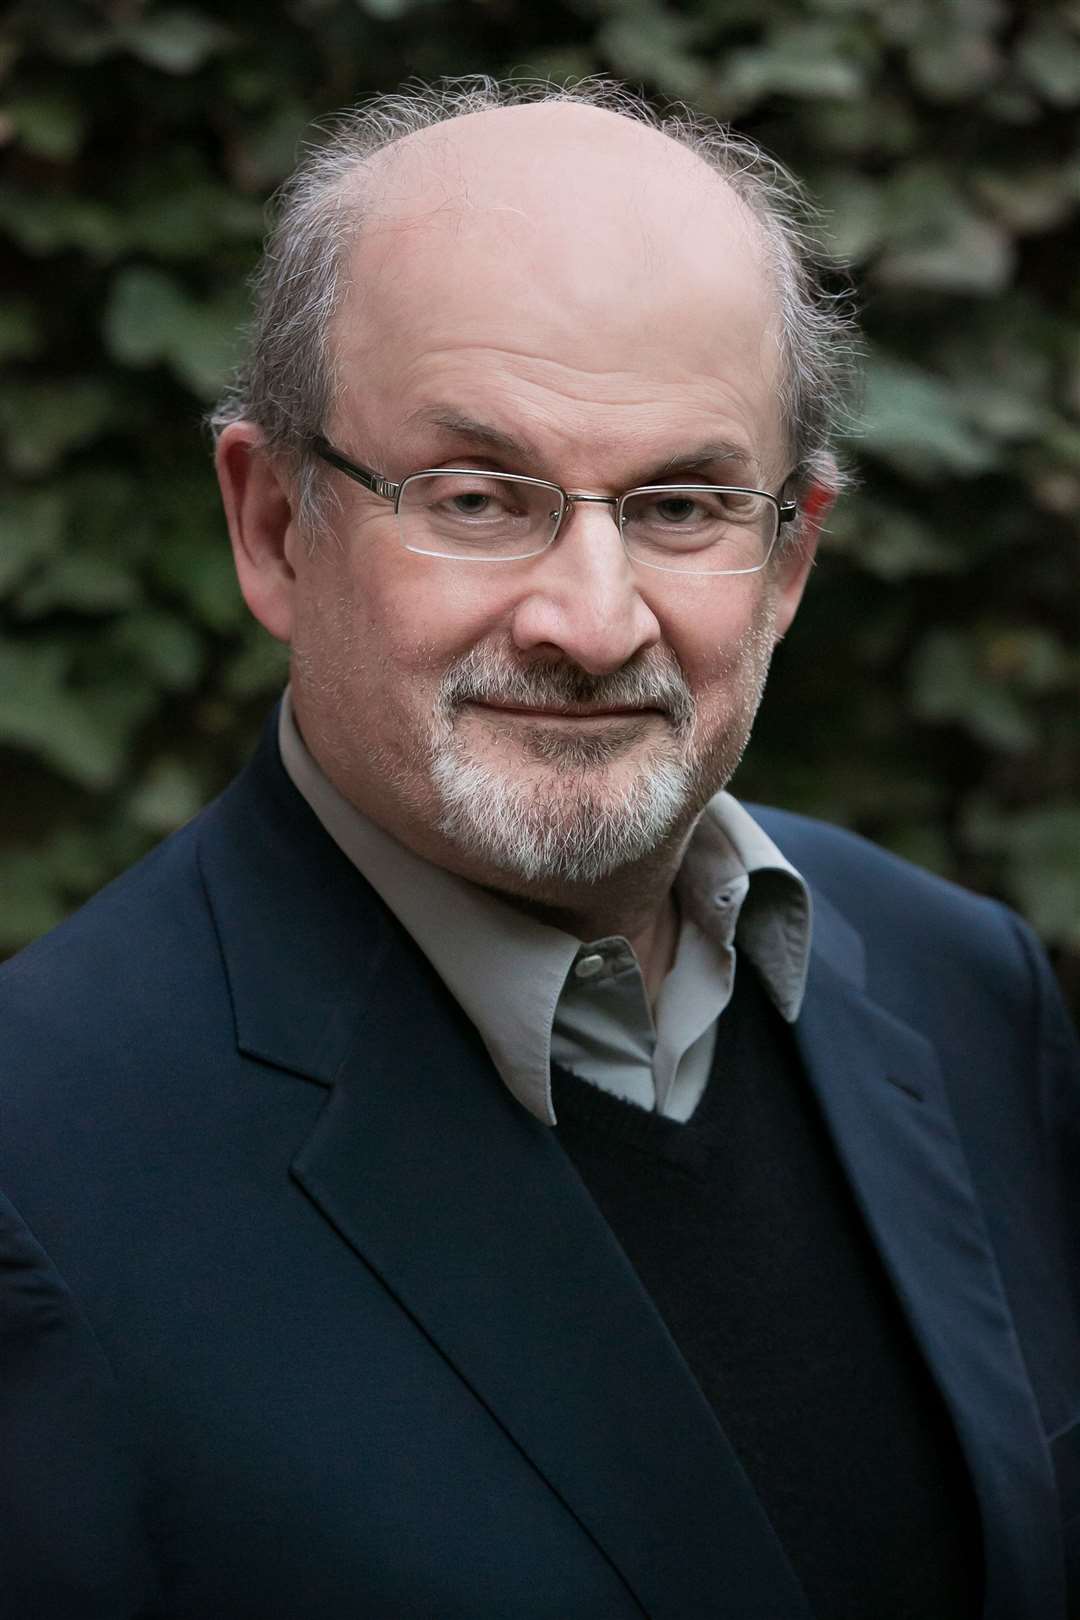 Sir Salman Rushdie (Booker Prizes/PA)